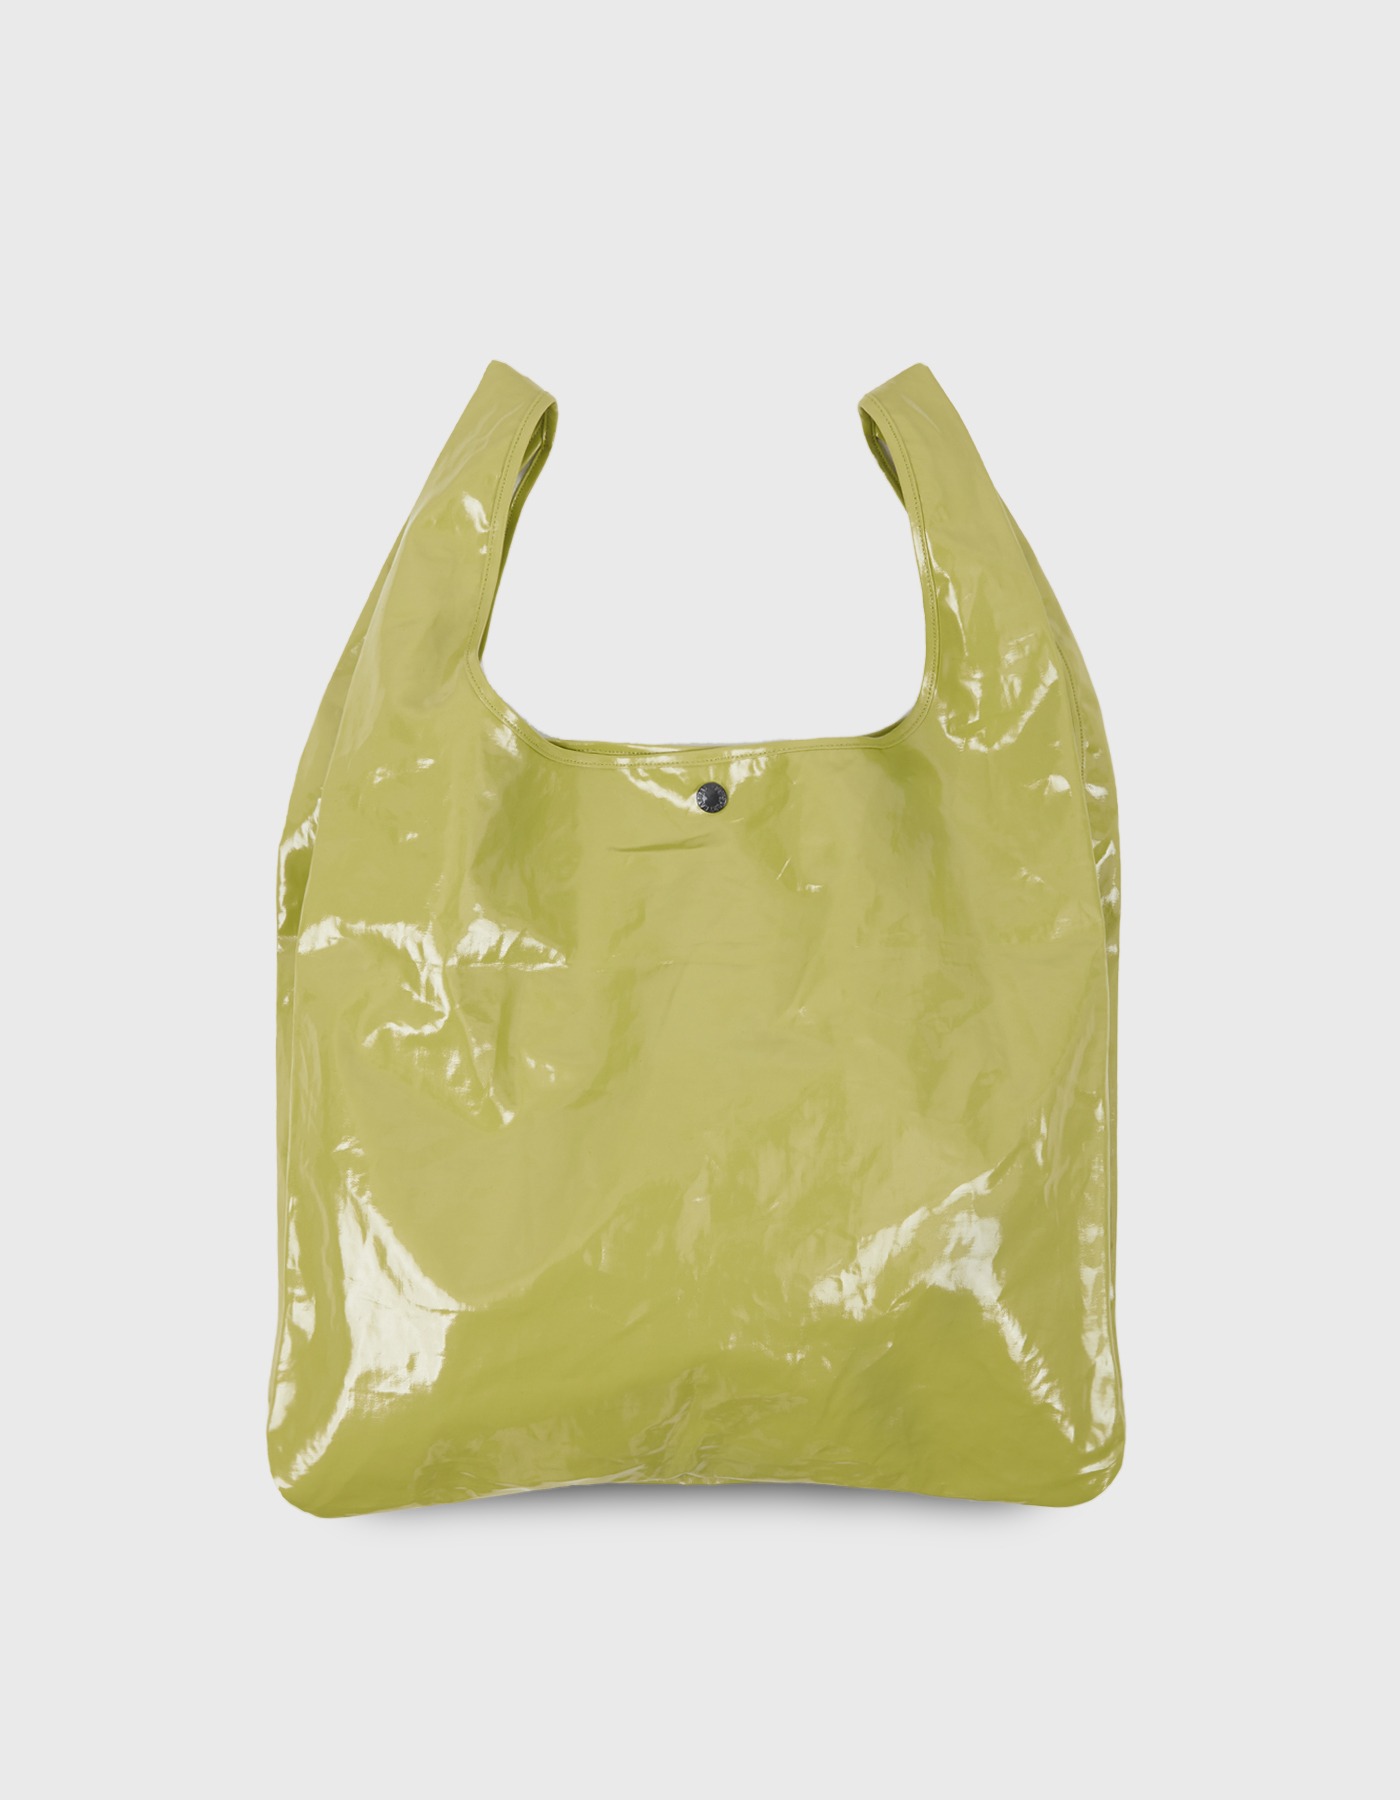 PATENT PLASTIC BAG / Lime